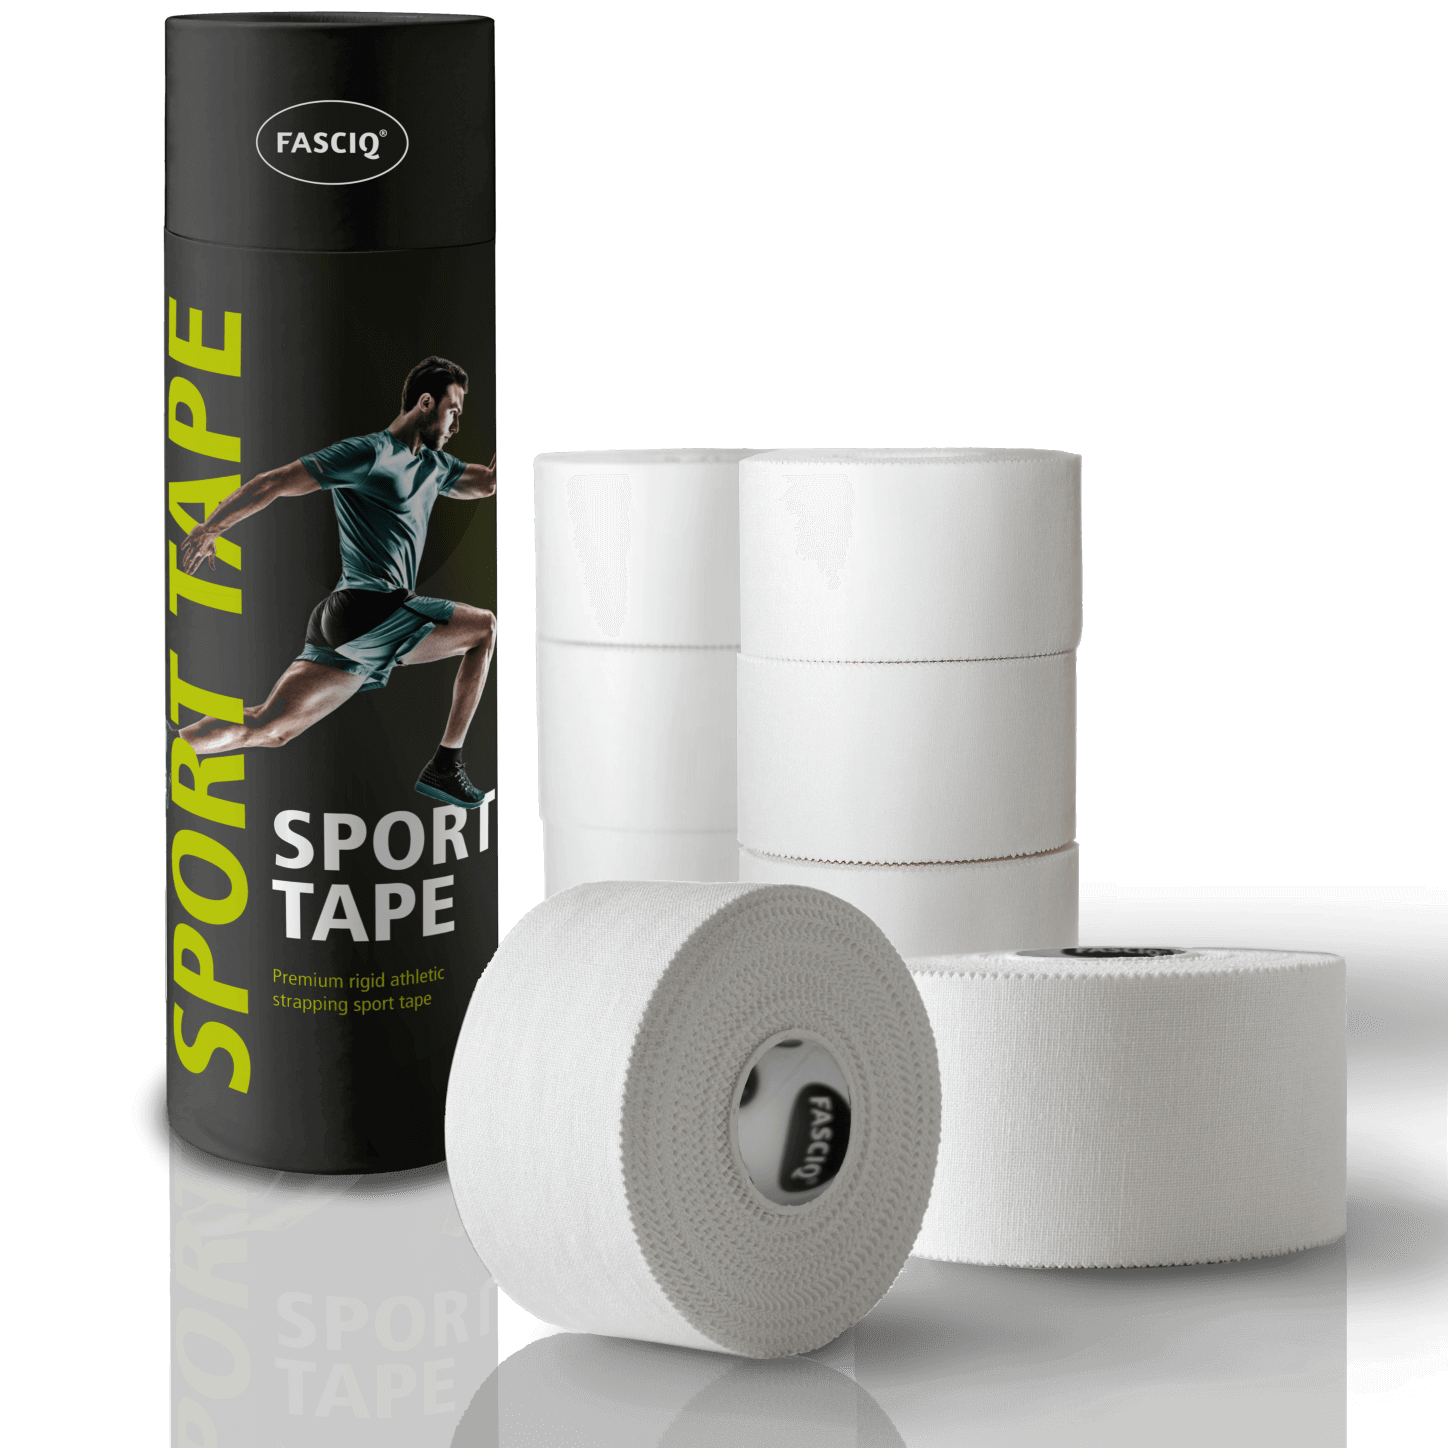 Fasciq Sports Zinc Oxide Tape